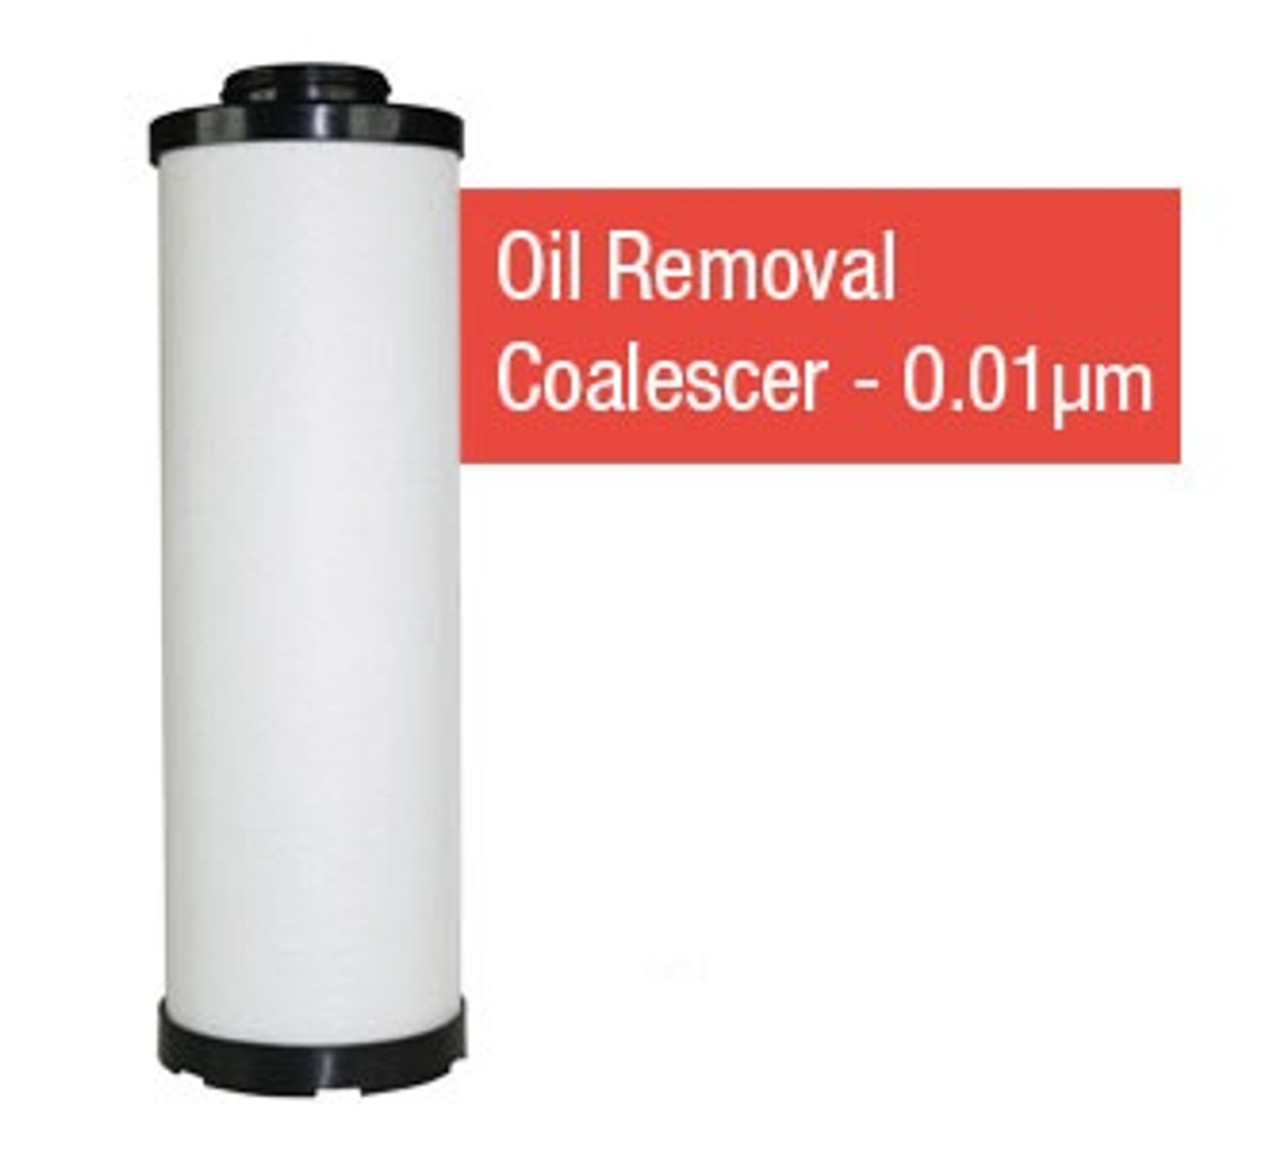 ABAC New - 2258290131 - AB216Y - Grade Y - Oil Removal Coalescer - 0.01 um